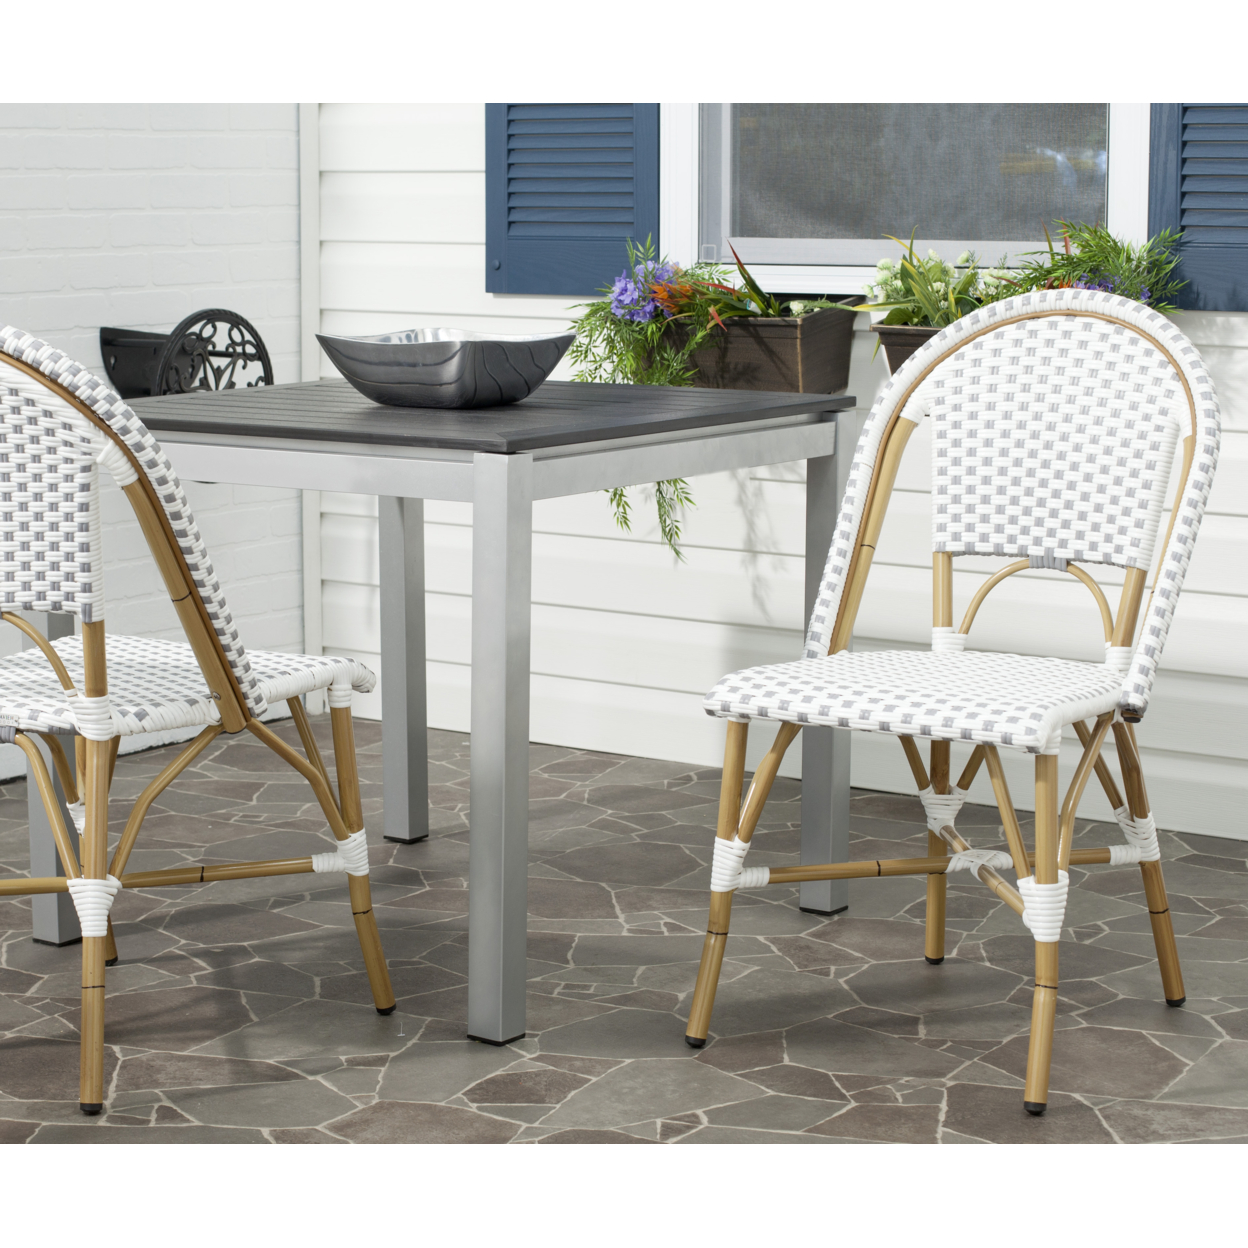 SAFAVIEH Outdoor Collection Salcha Bistro Side Chair Grey/White/Light Brown